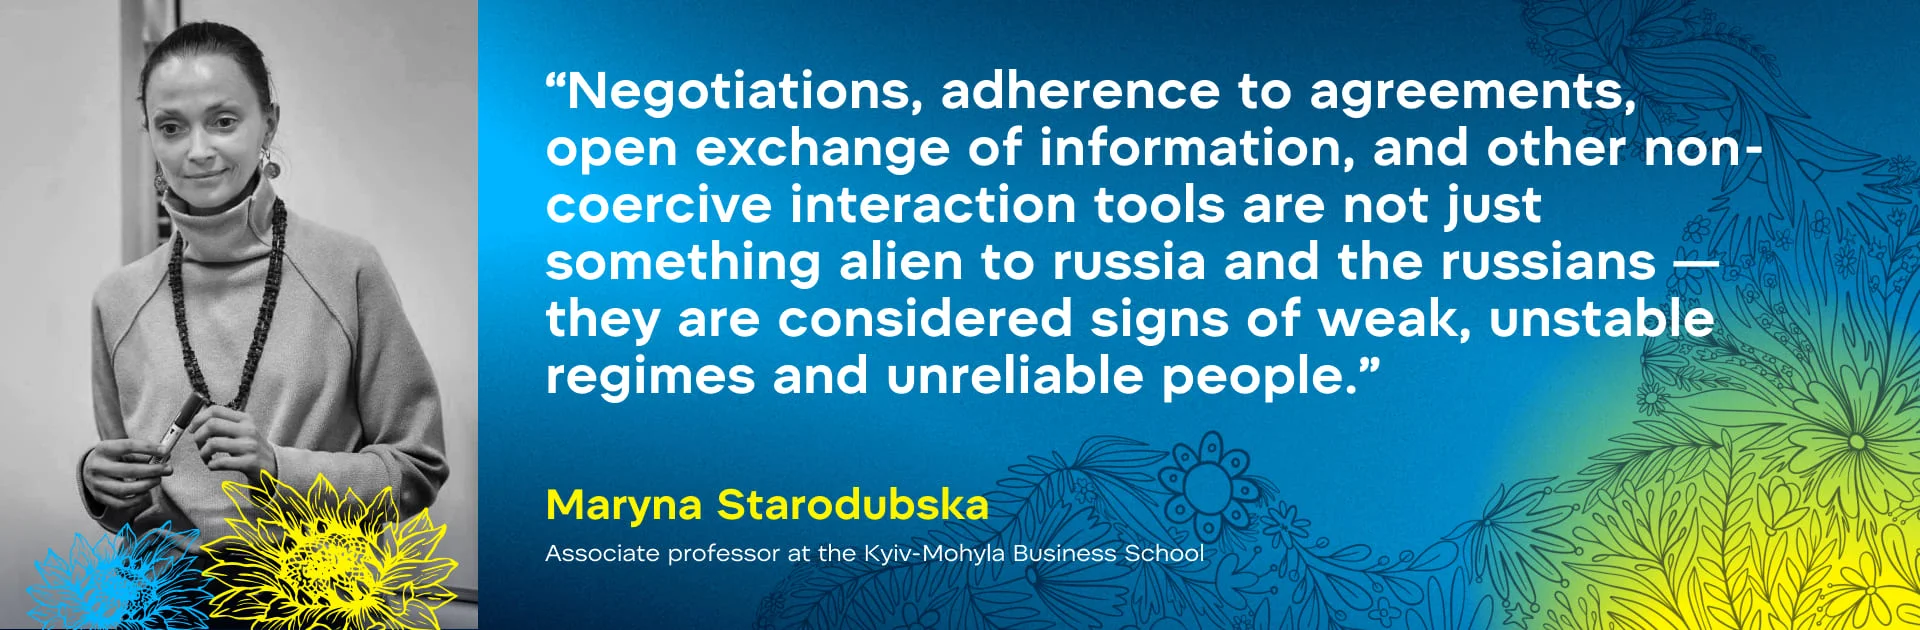 Maryna Starodubska, associate professor at the Kyiv-Mohyla Business School. Credit: WePlay Holding